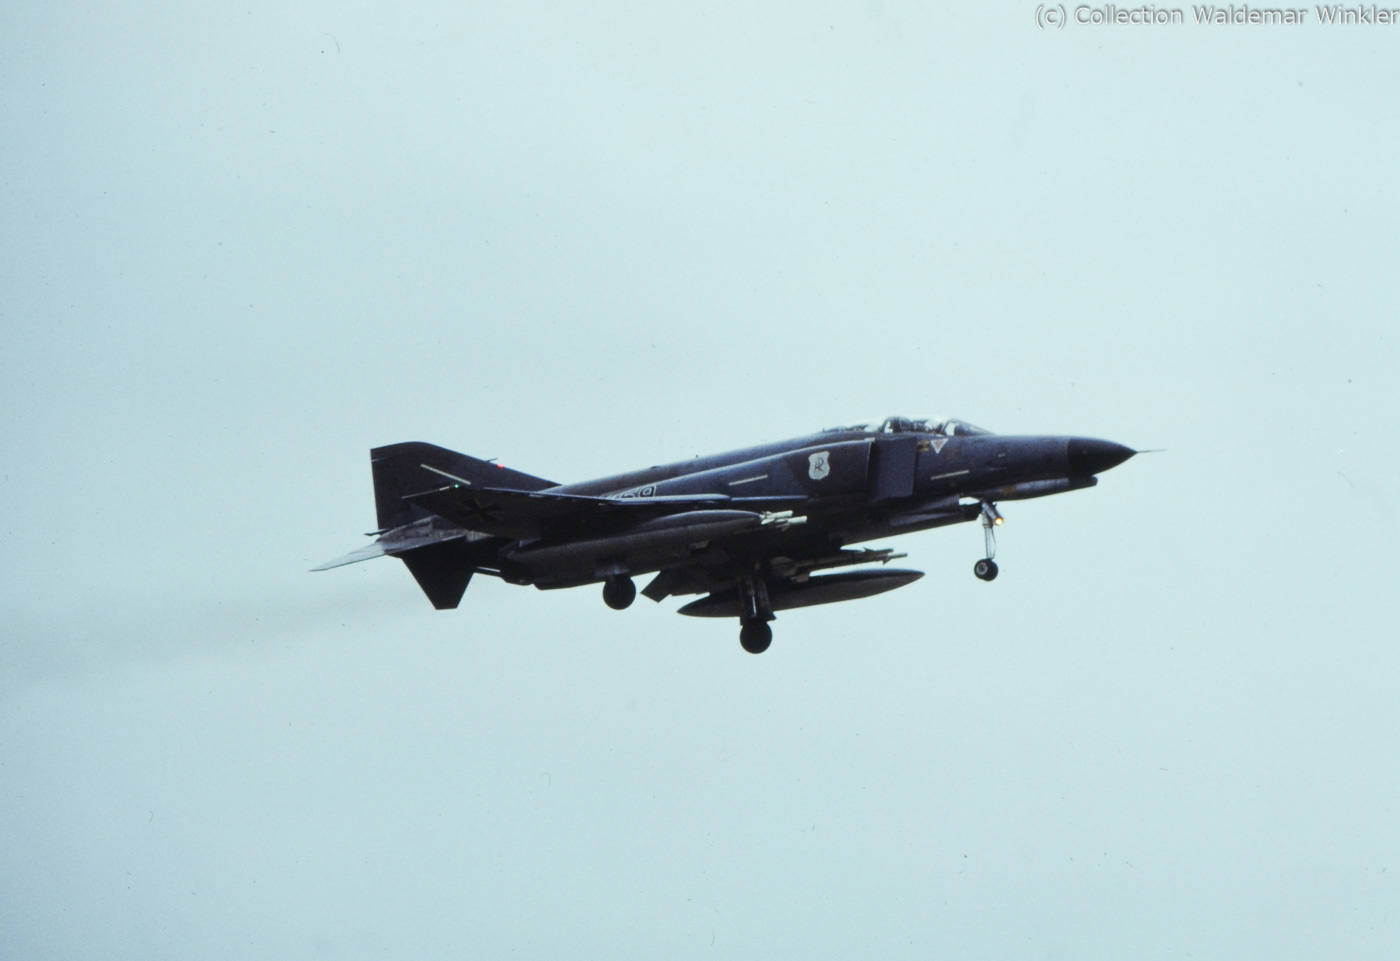 F-4_Phantom_II_DSC_1372.jpg